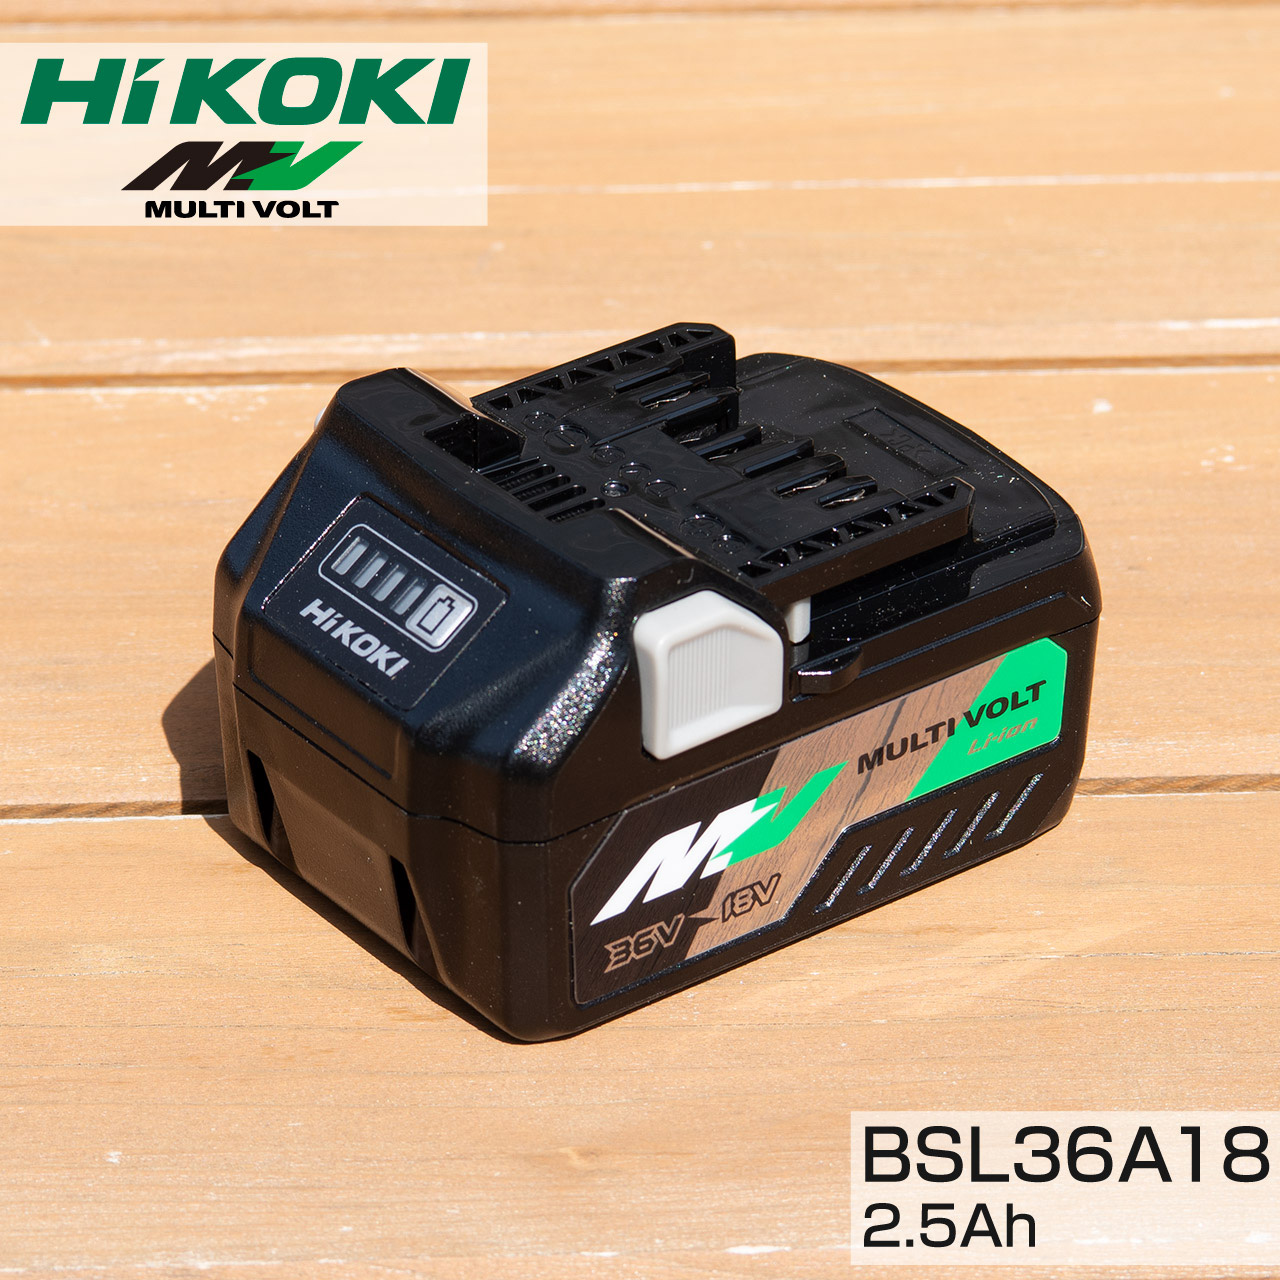 HiKOKI ハイコーキ マルチボルト リチウムイオン電池 バッテリー BSL36A18 2.5Ah